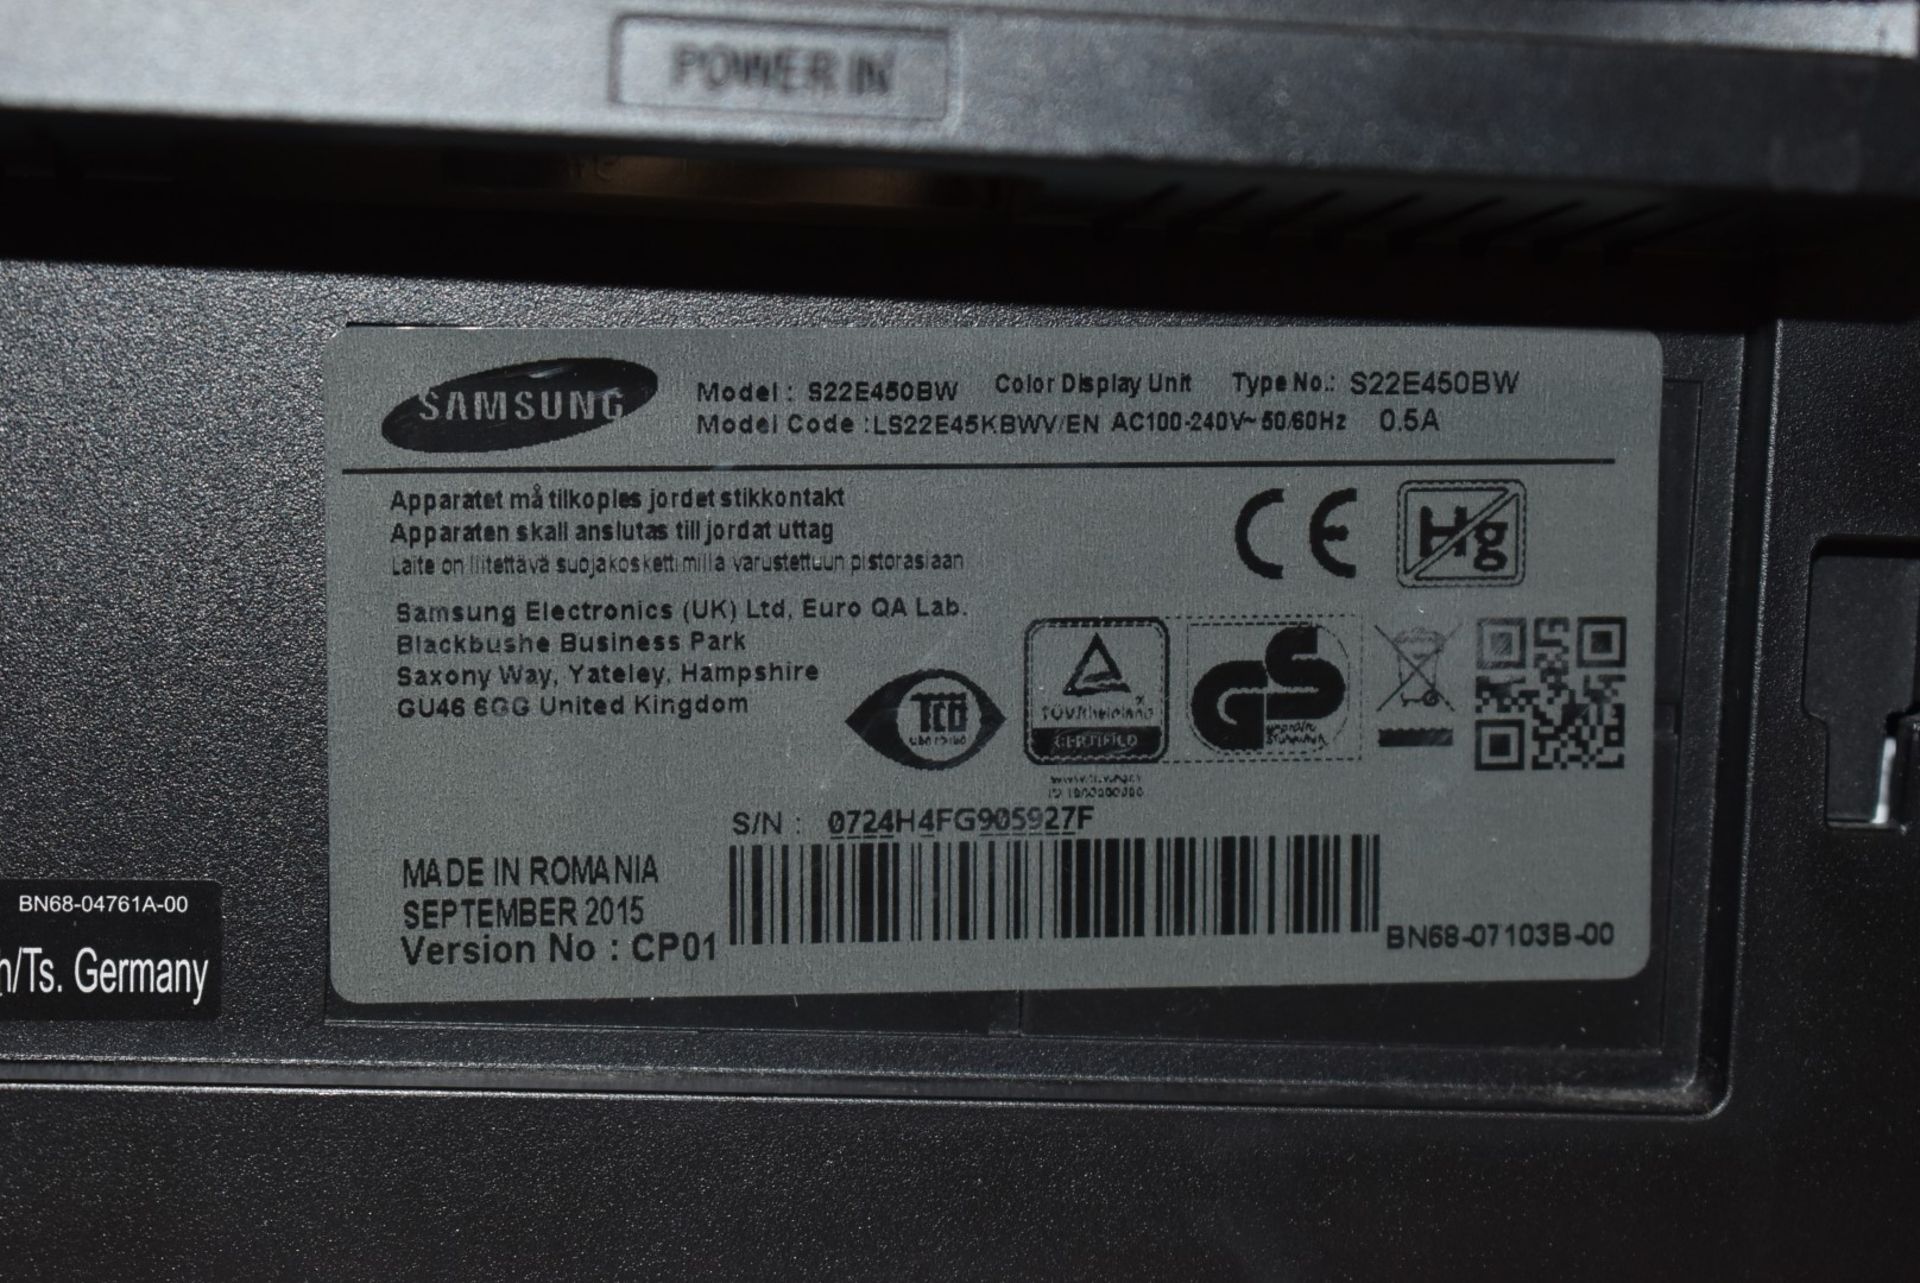 1 x Samsung 22 Inch Computer Monitor - Model S22E450BW - Ref: MPC140 CB - CL678 - Location: - Image 9 of 11